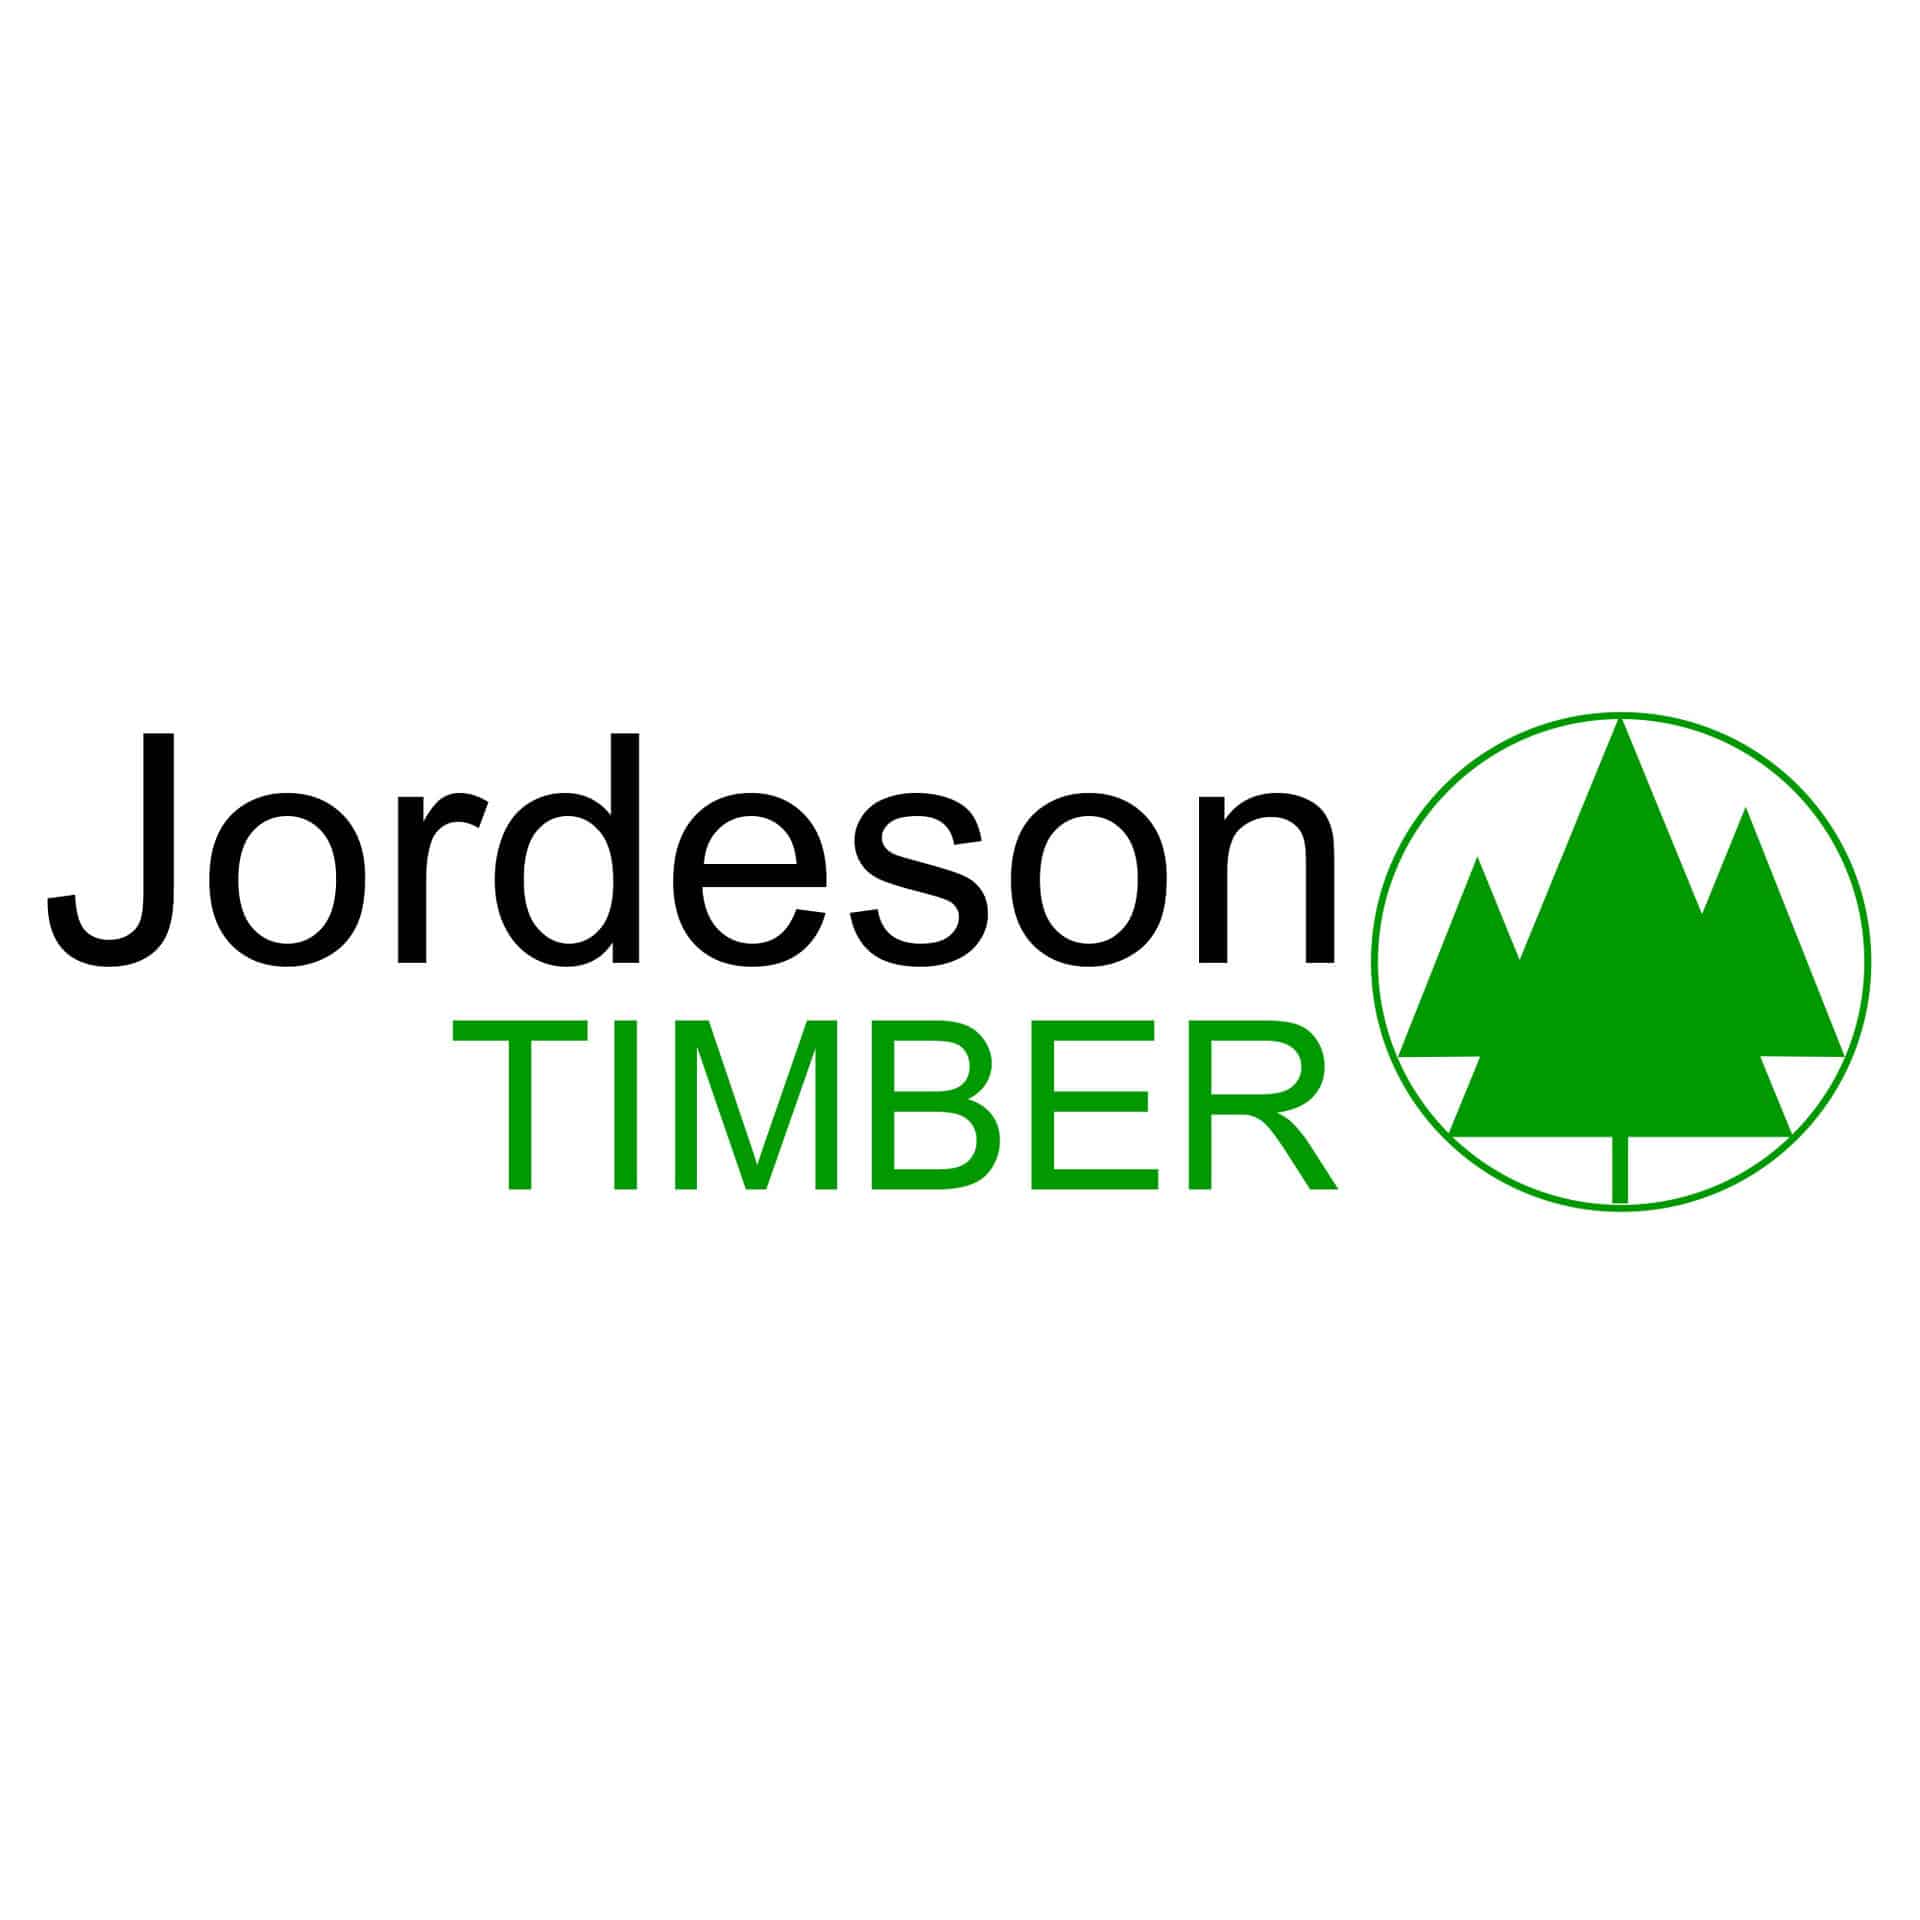 Jordeson Timber